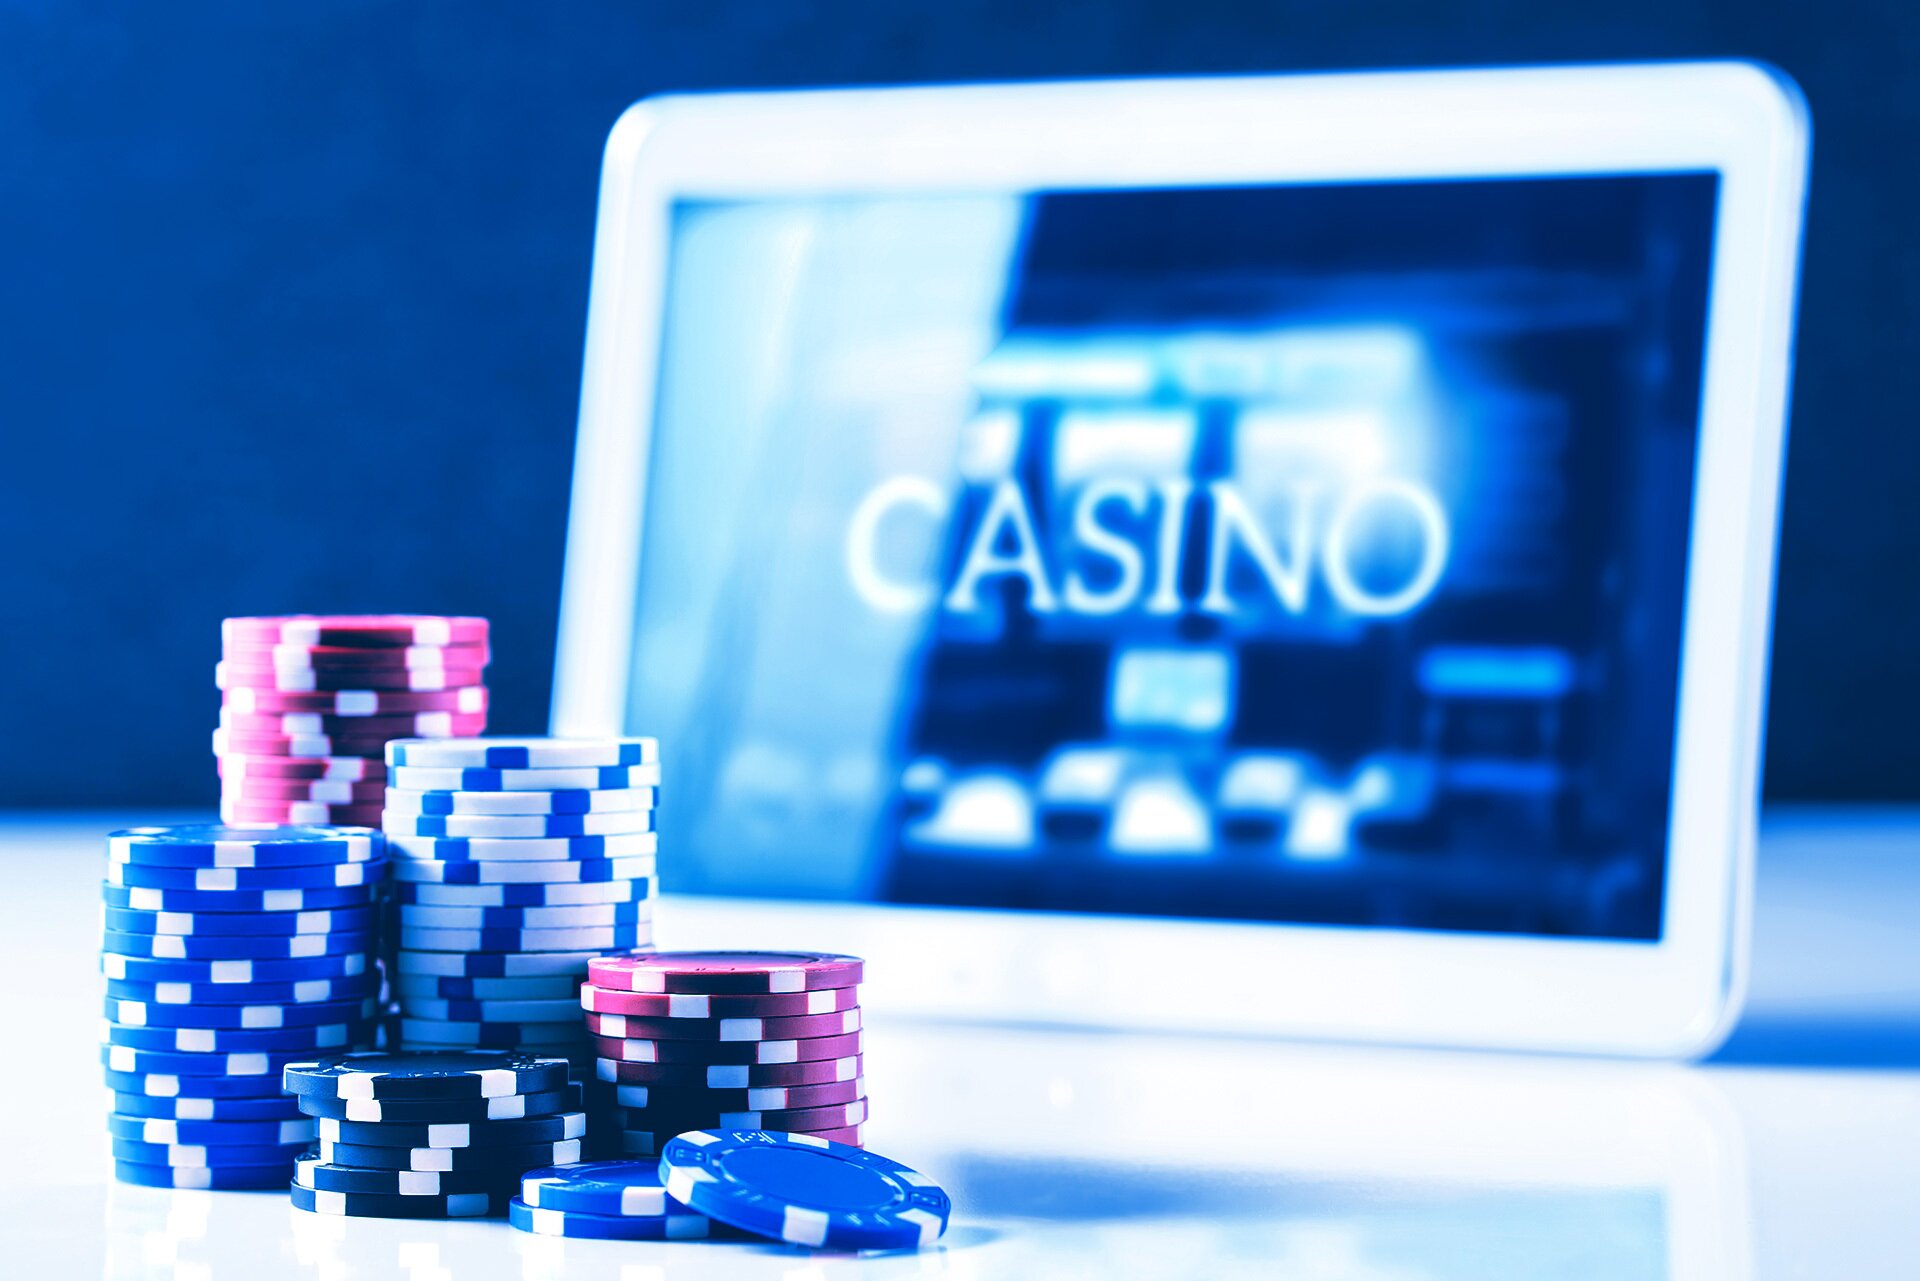 ca casino online